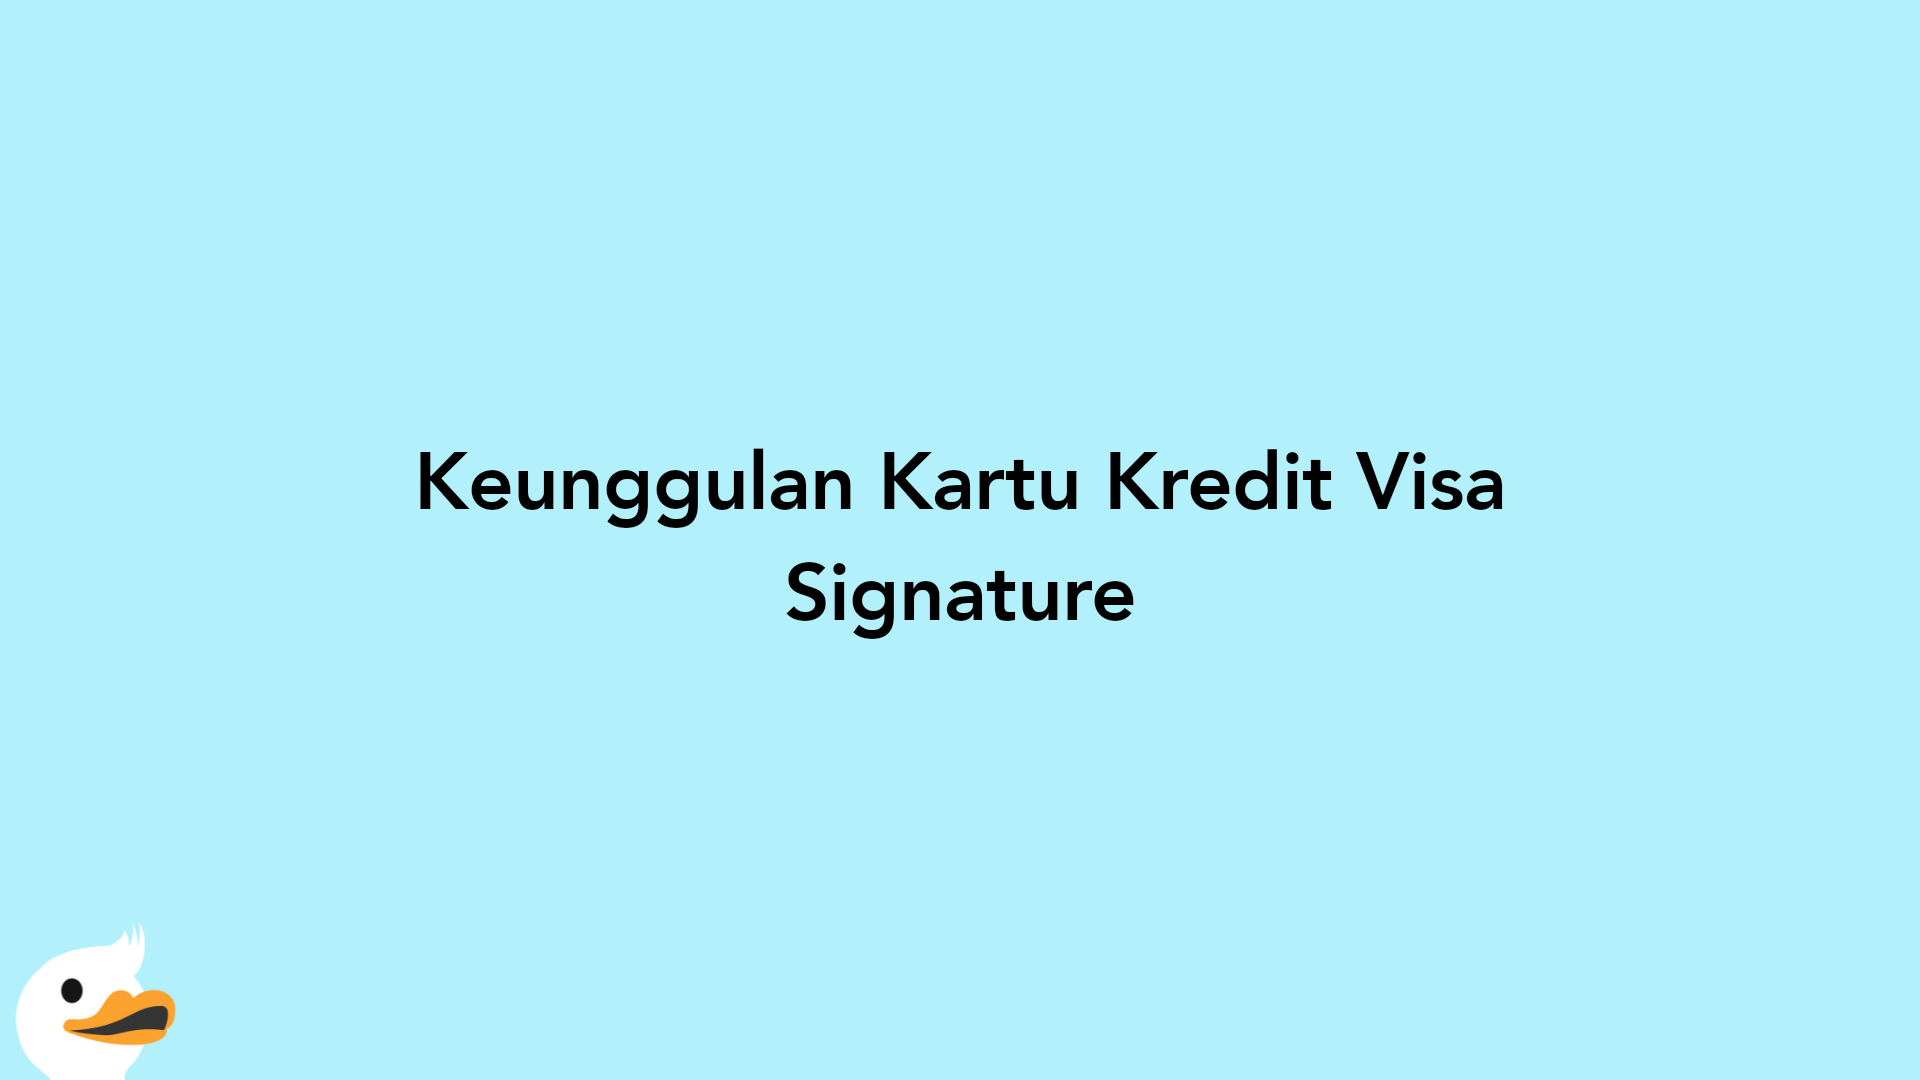 Keunggulan Kartu Kredit Visa Signature